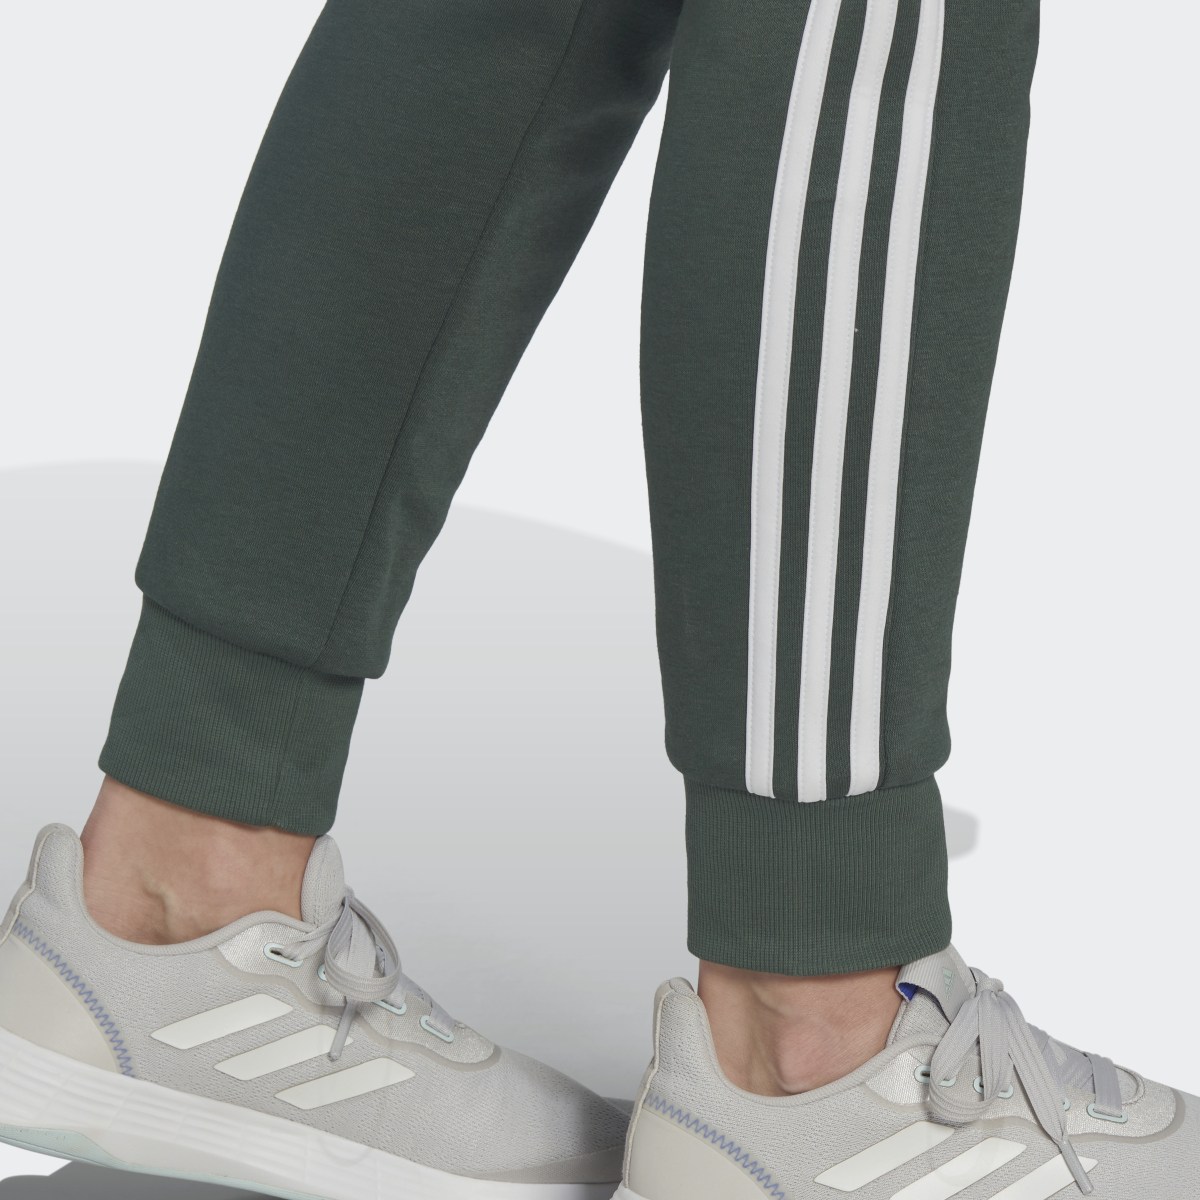 Adidas Essentials Fleece 3-Stripes Pants. 6